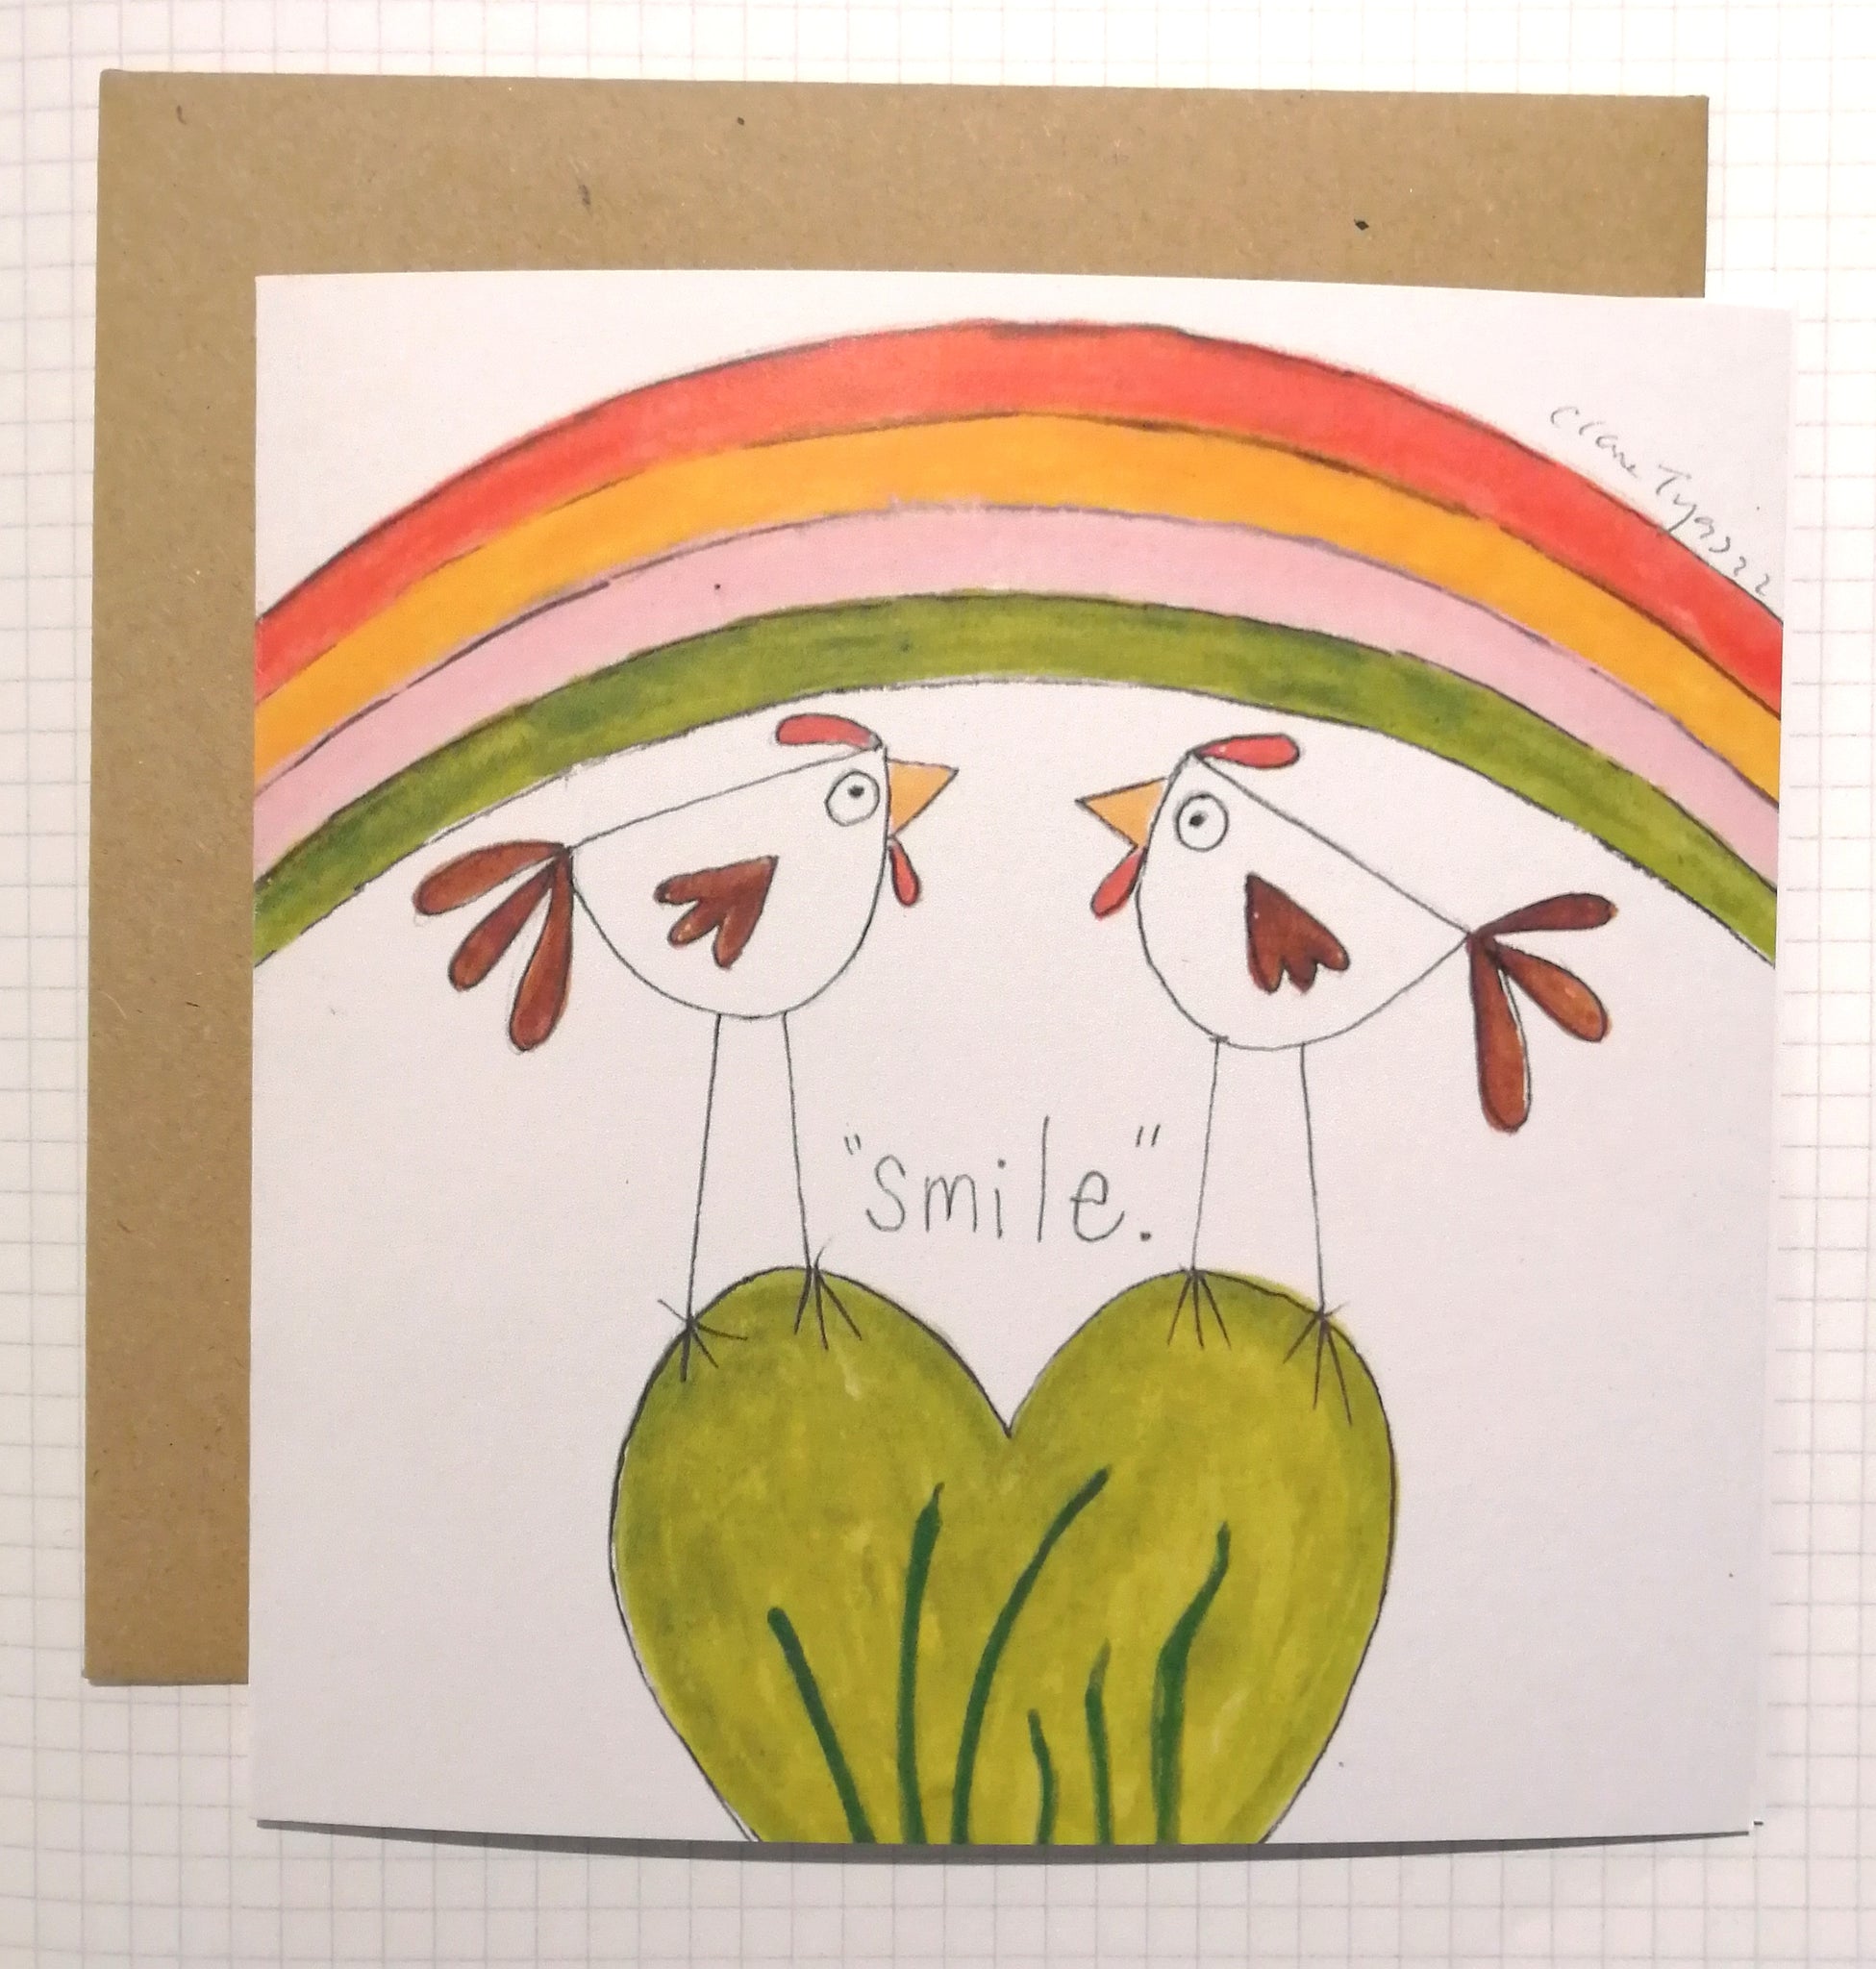 Smile . Greetings card.